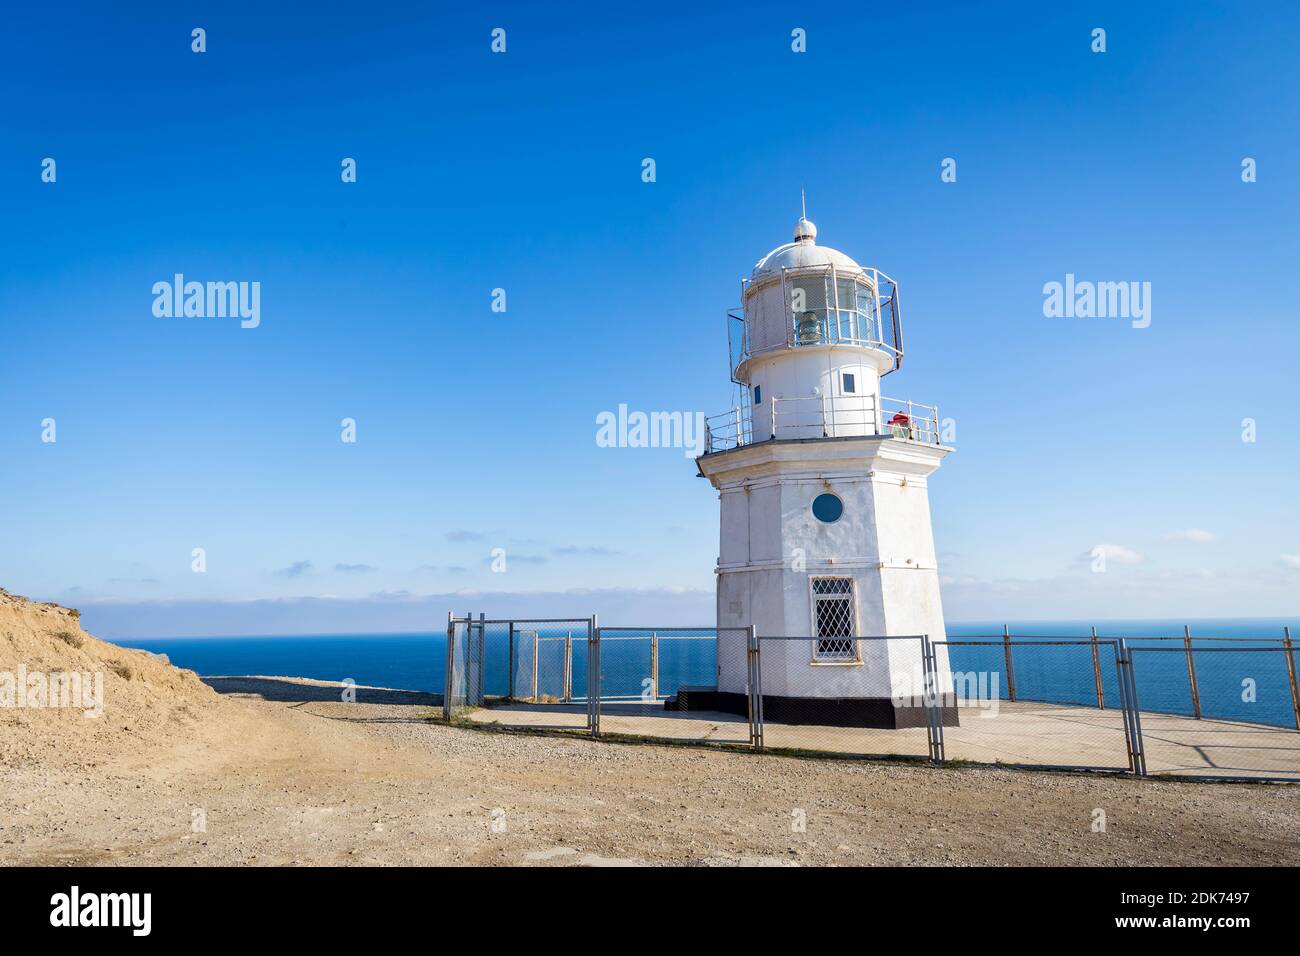 Lighthouse By Sea Against Blue Sky Stock Photo